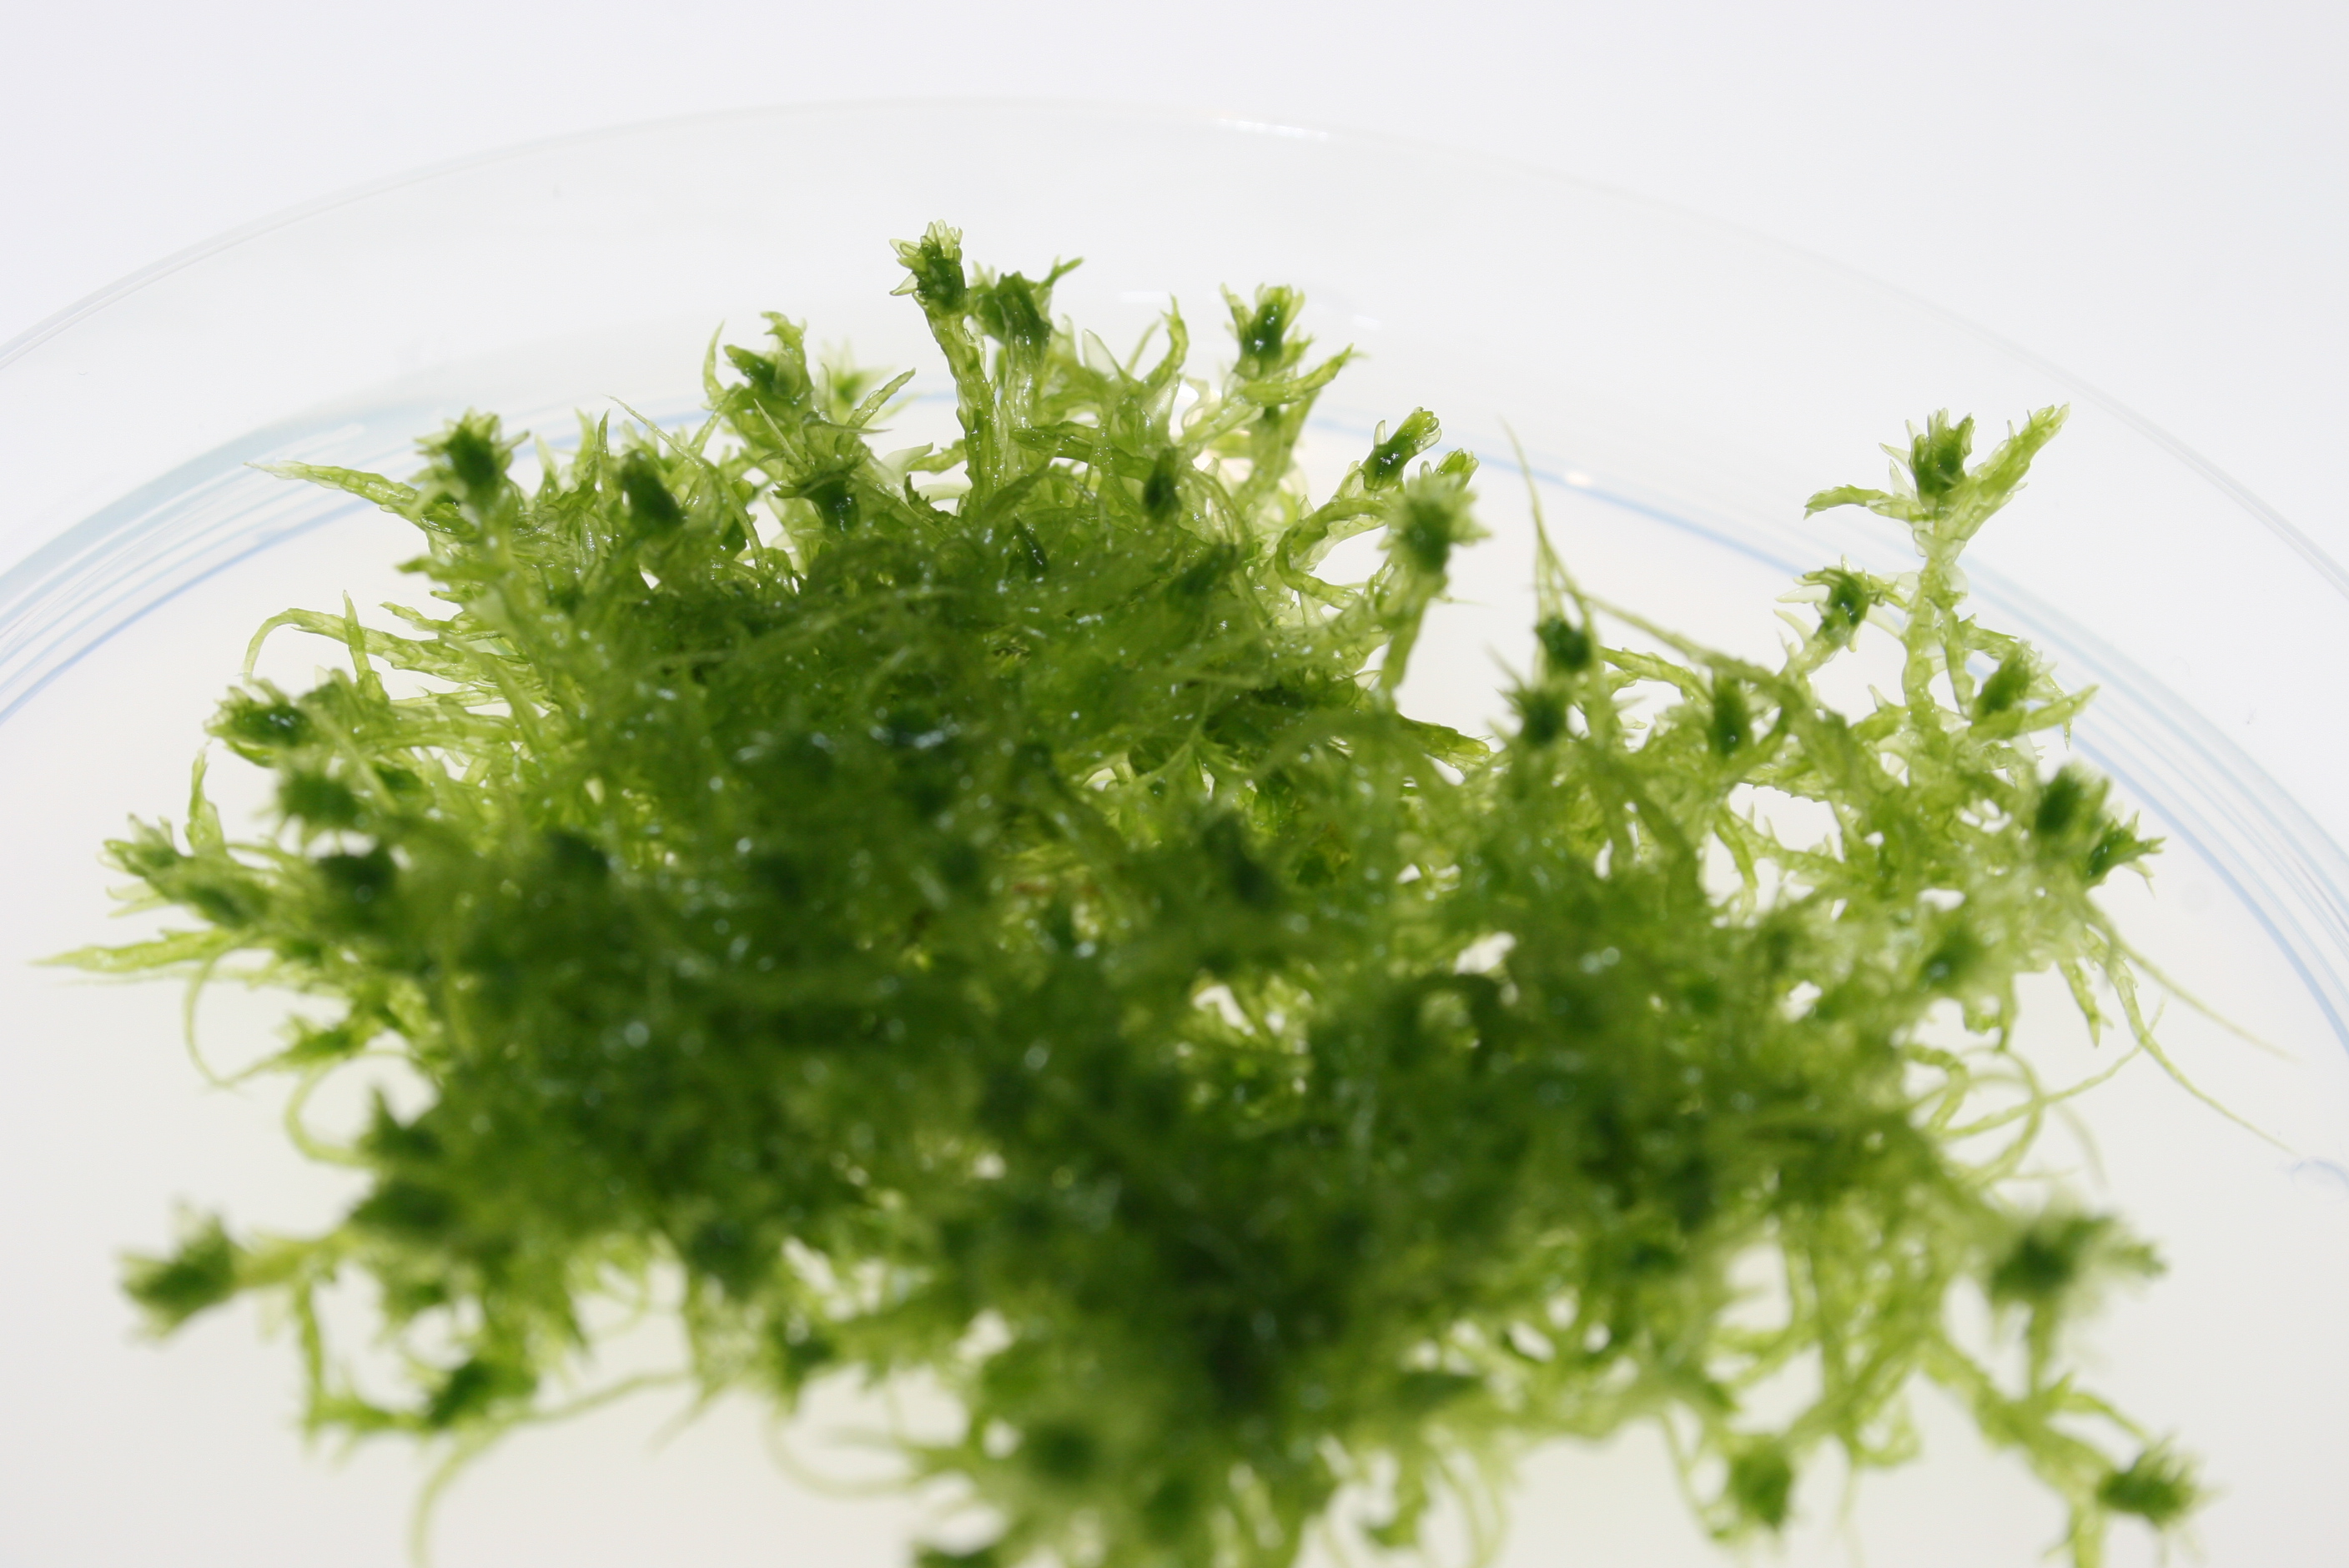 Moss plant in a petri dish